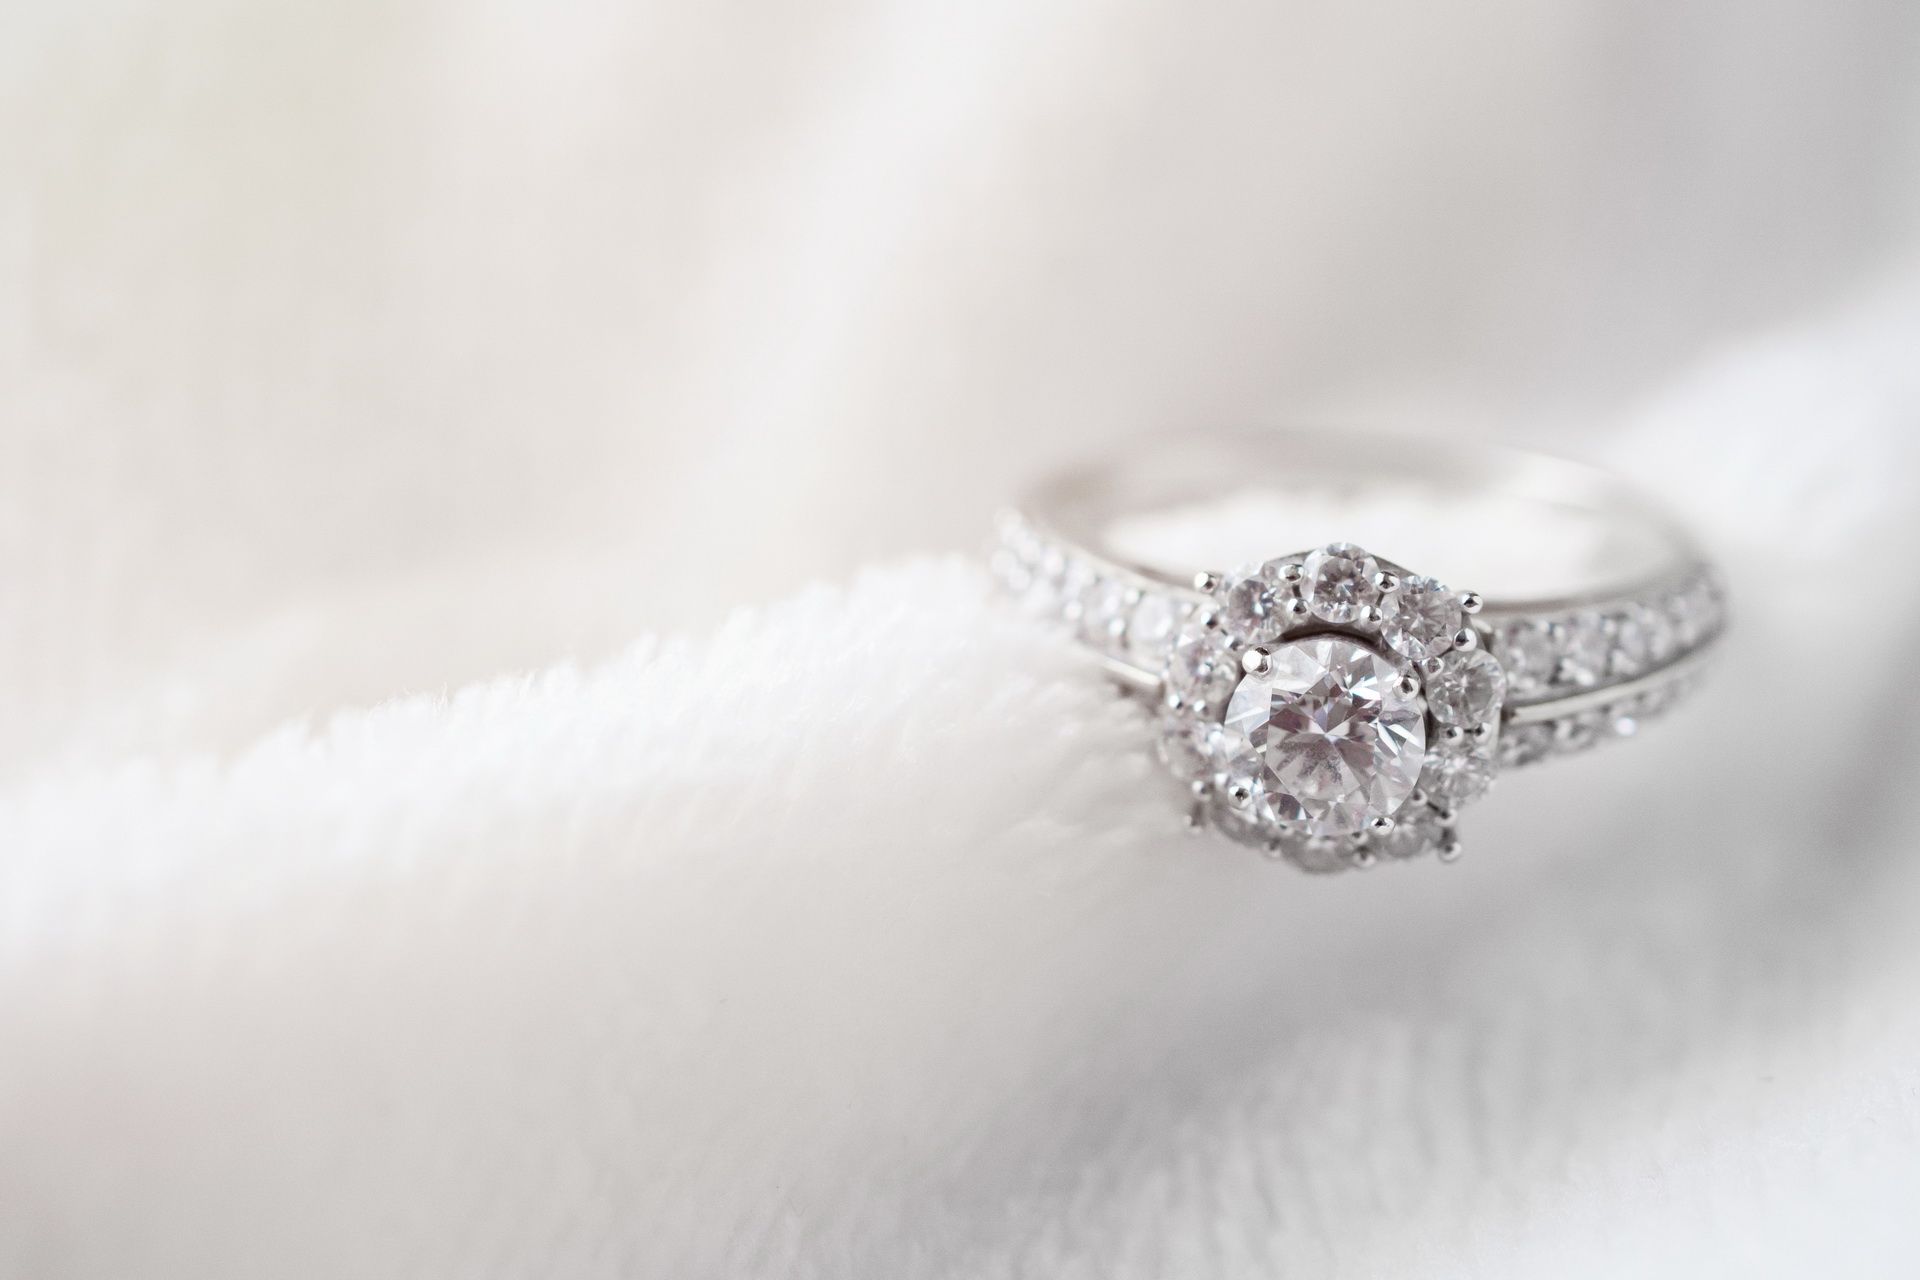 luxury-jewelry-diamond-ring-white-fur-texture.jpg